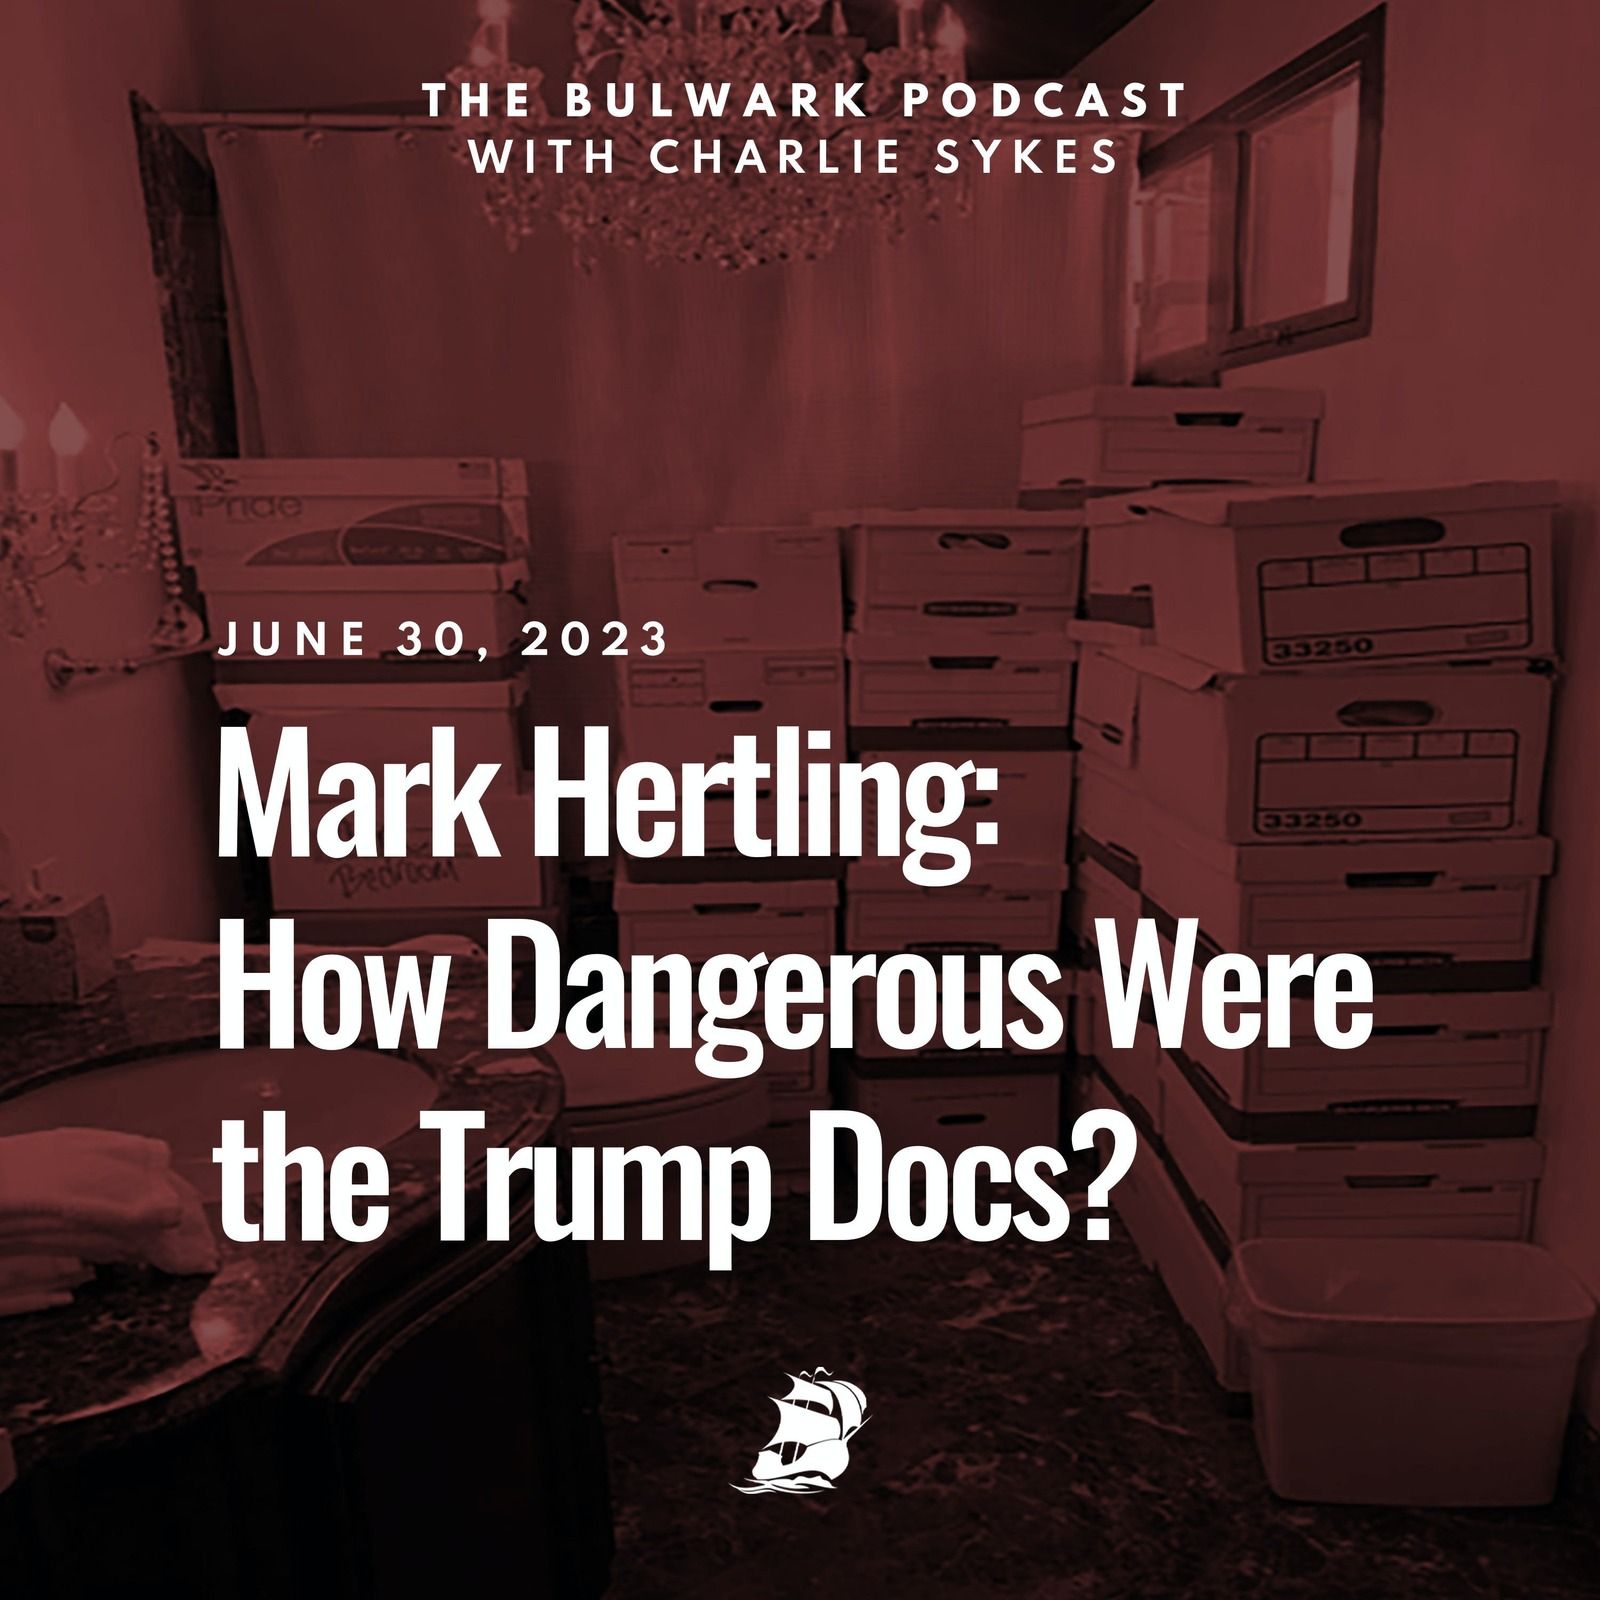 Mark Hertling: How Dangerous Were the Trump Docs?